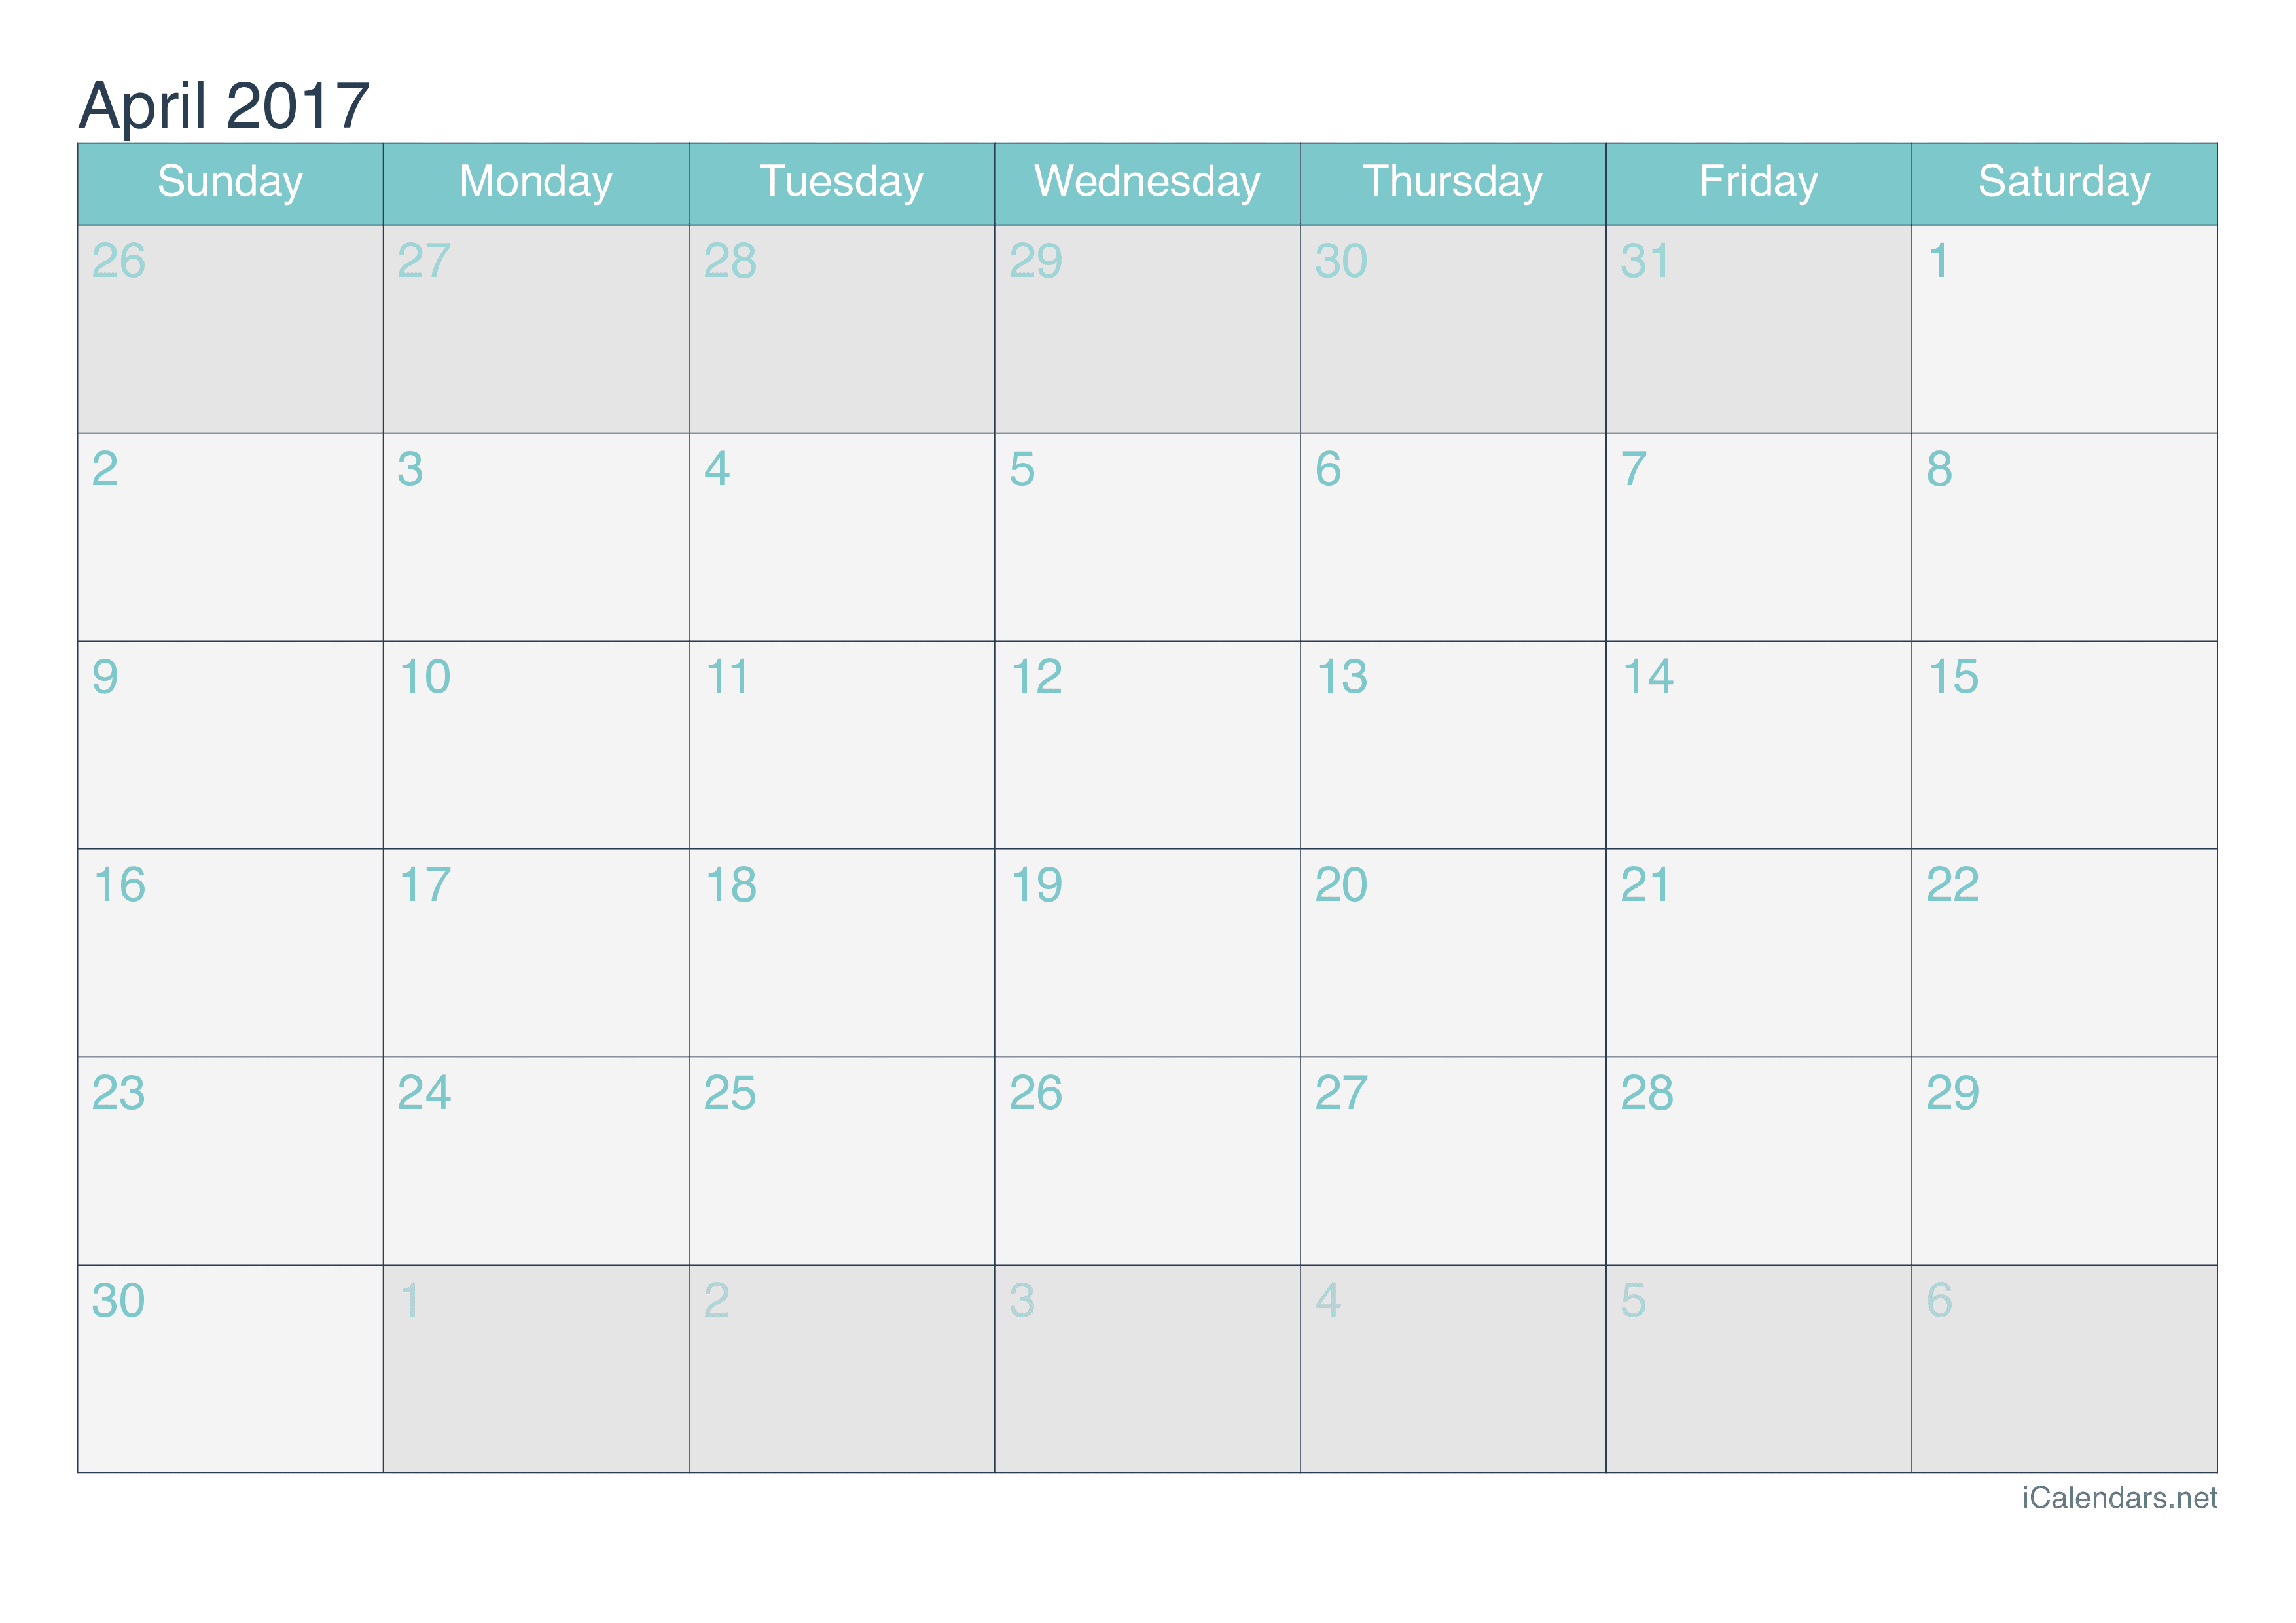 April 2017 Printable Calendar icalendars net